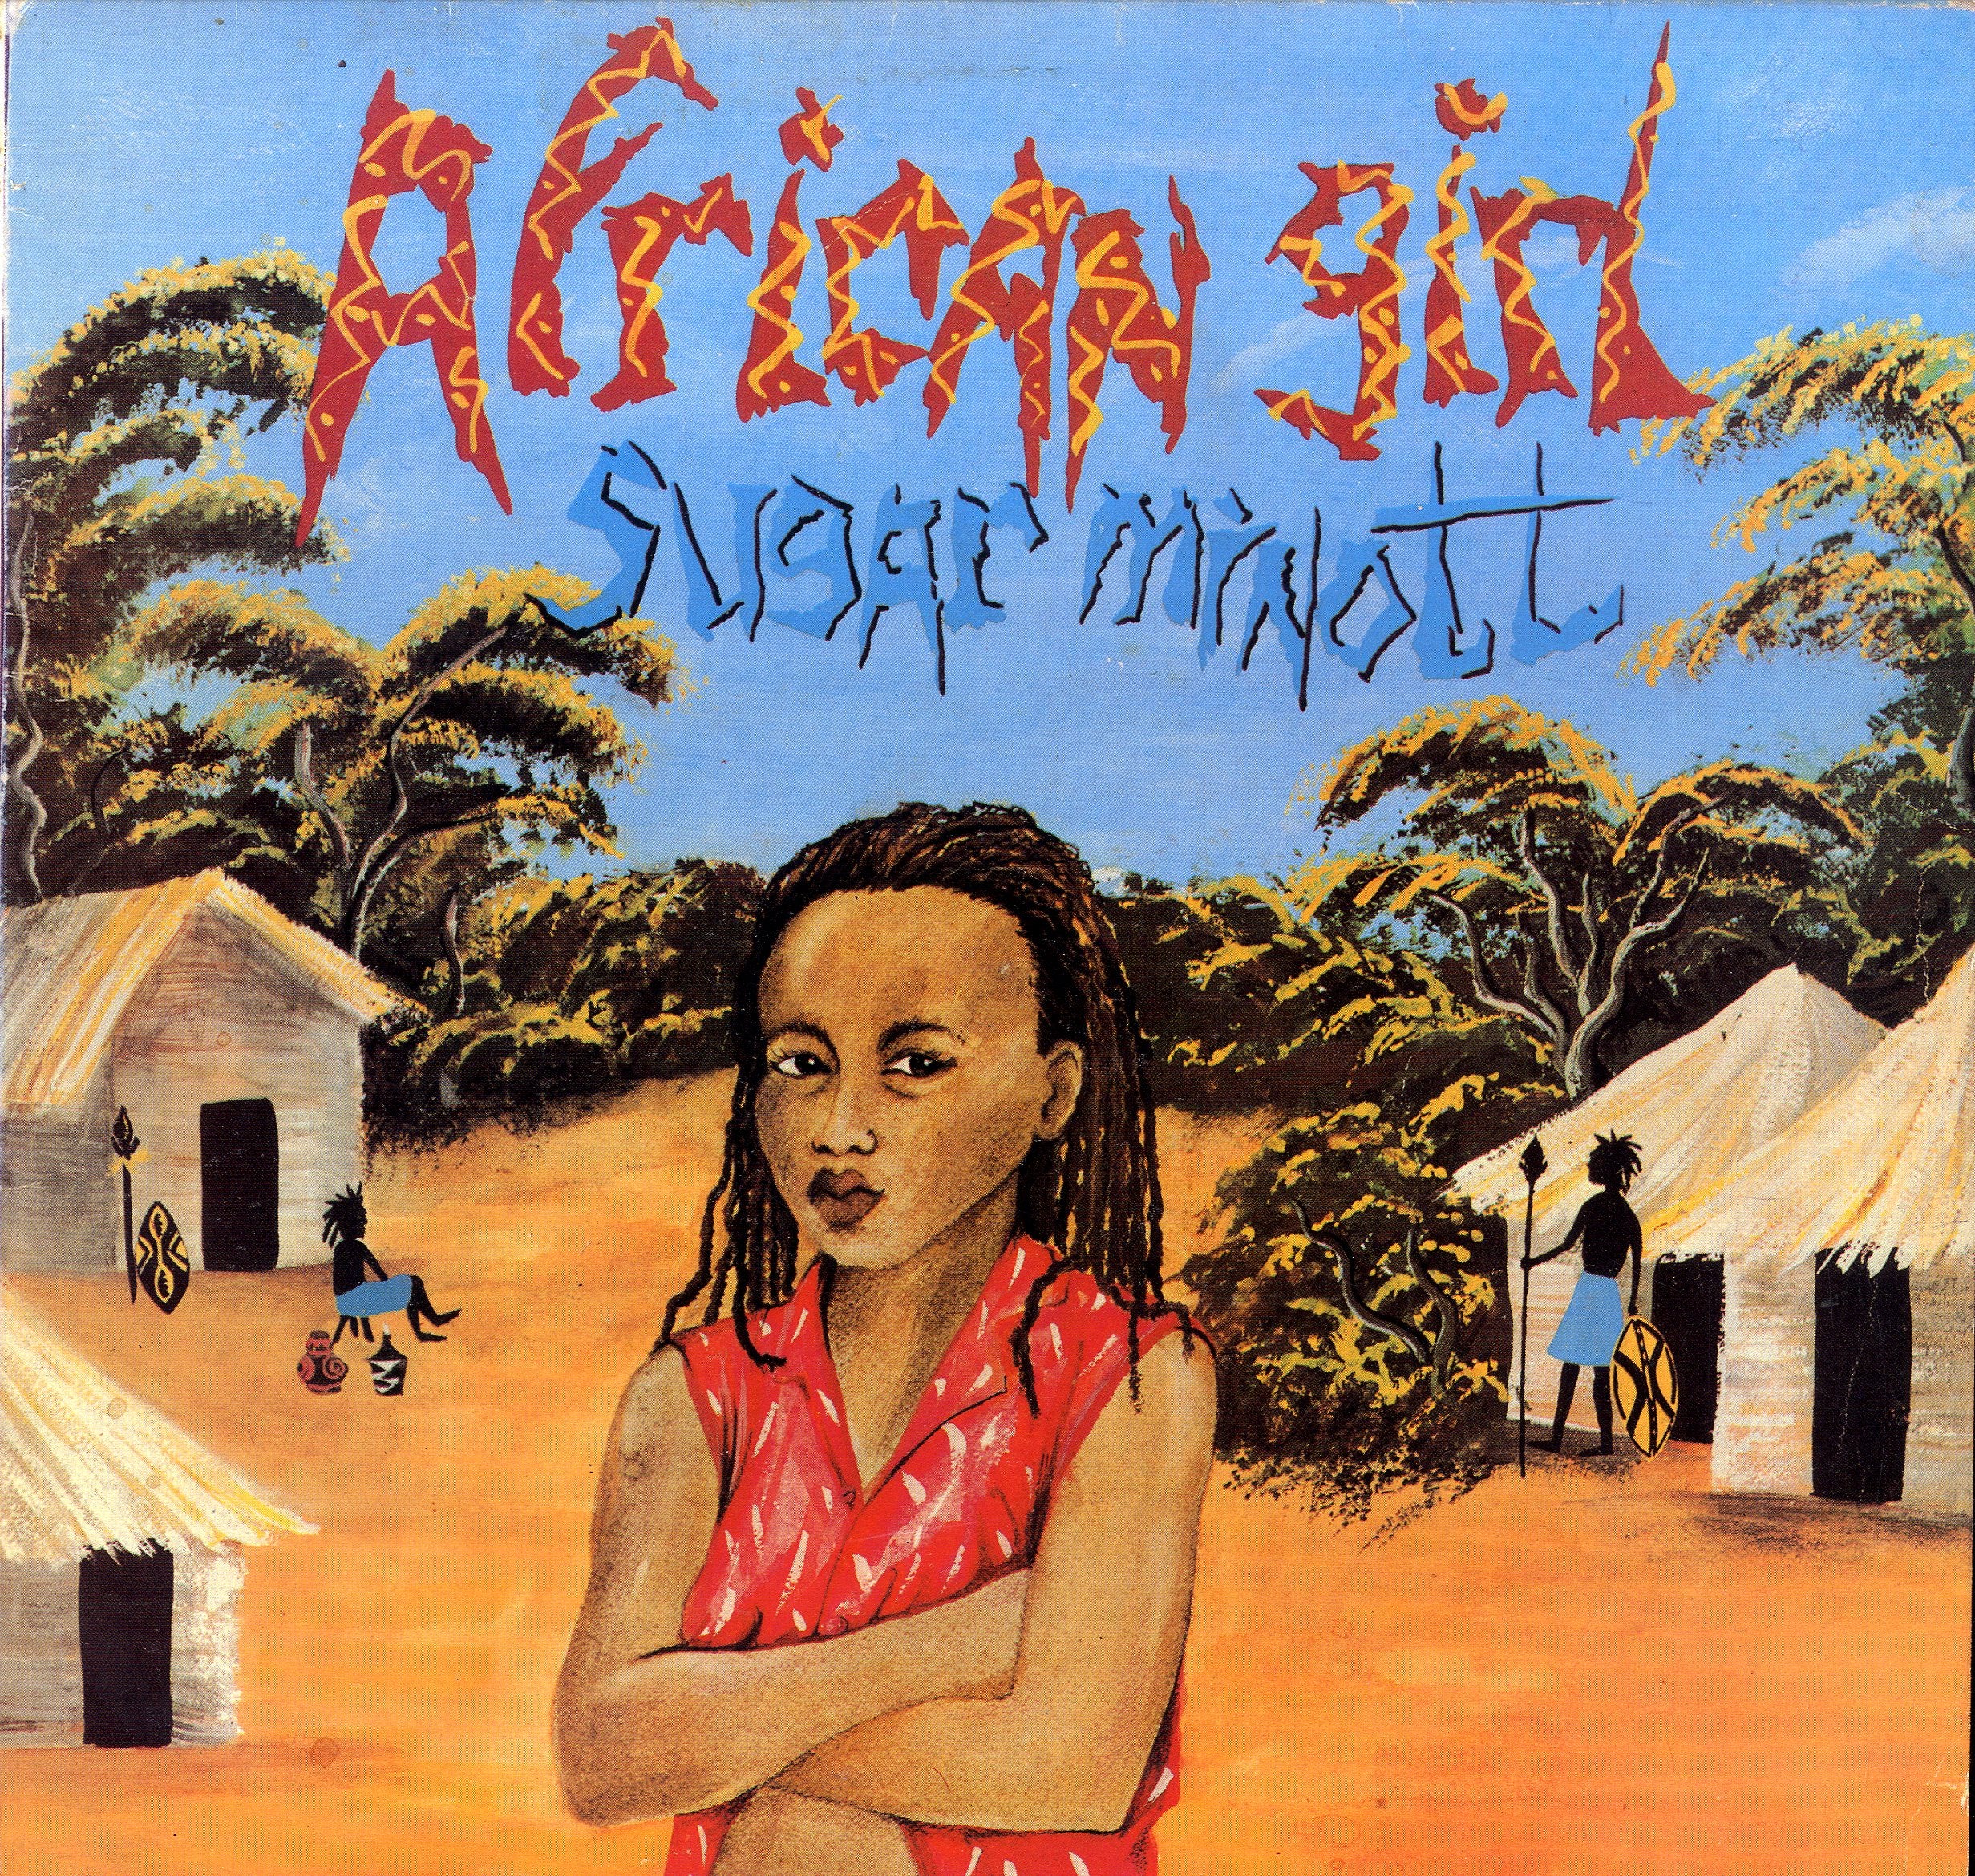 SUGAR MINOTT [African Girl]